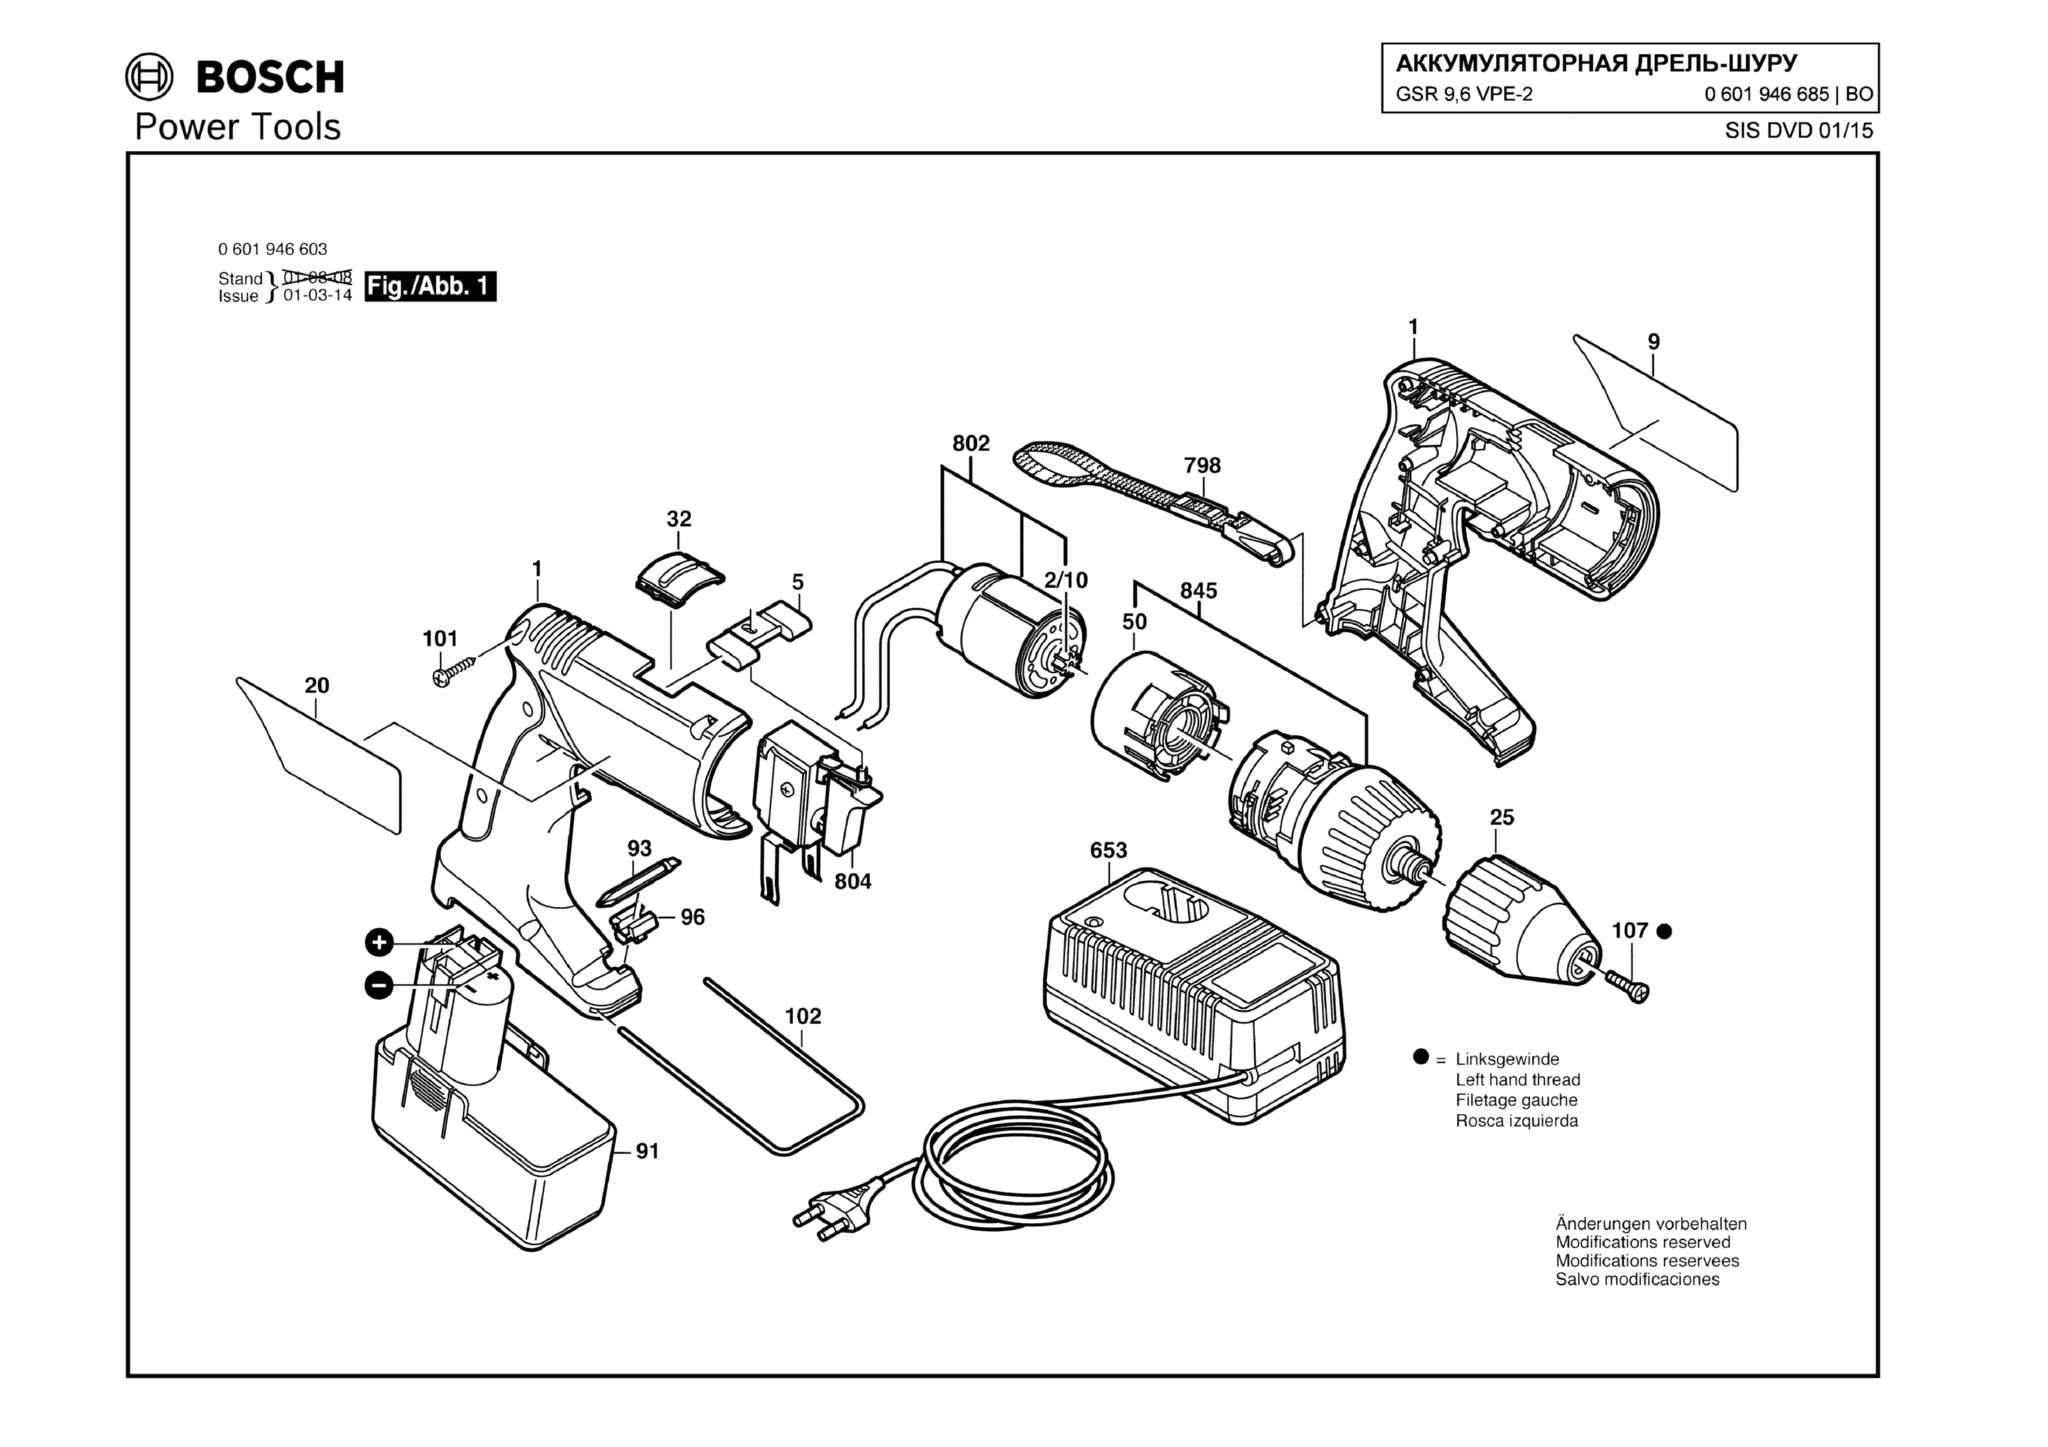 Запчасти, схема и деталировка Bosch GSR 9,6 VPE-2 (ТИП 0601946685)